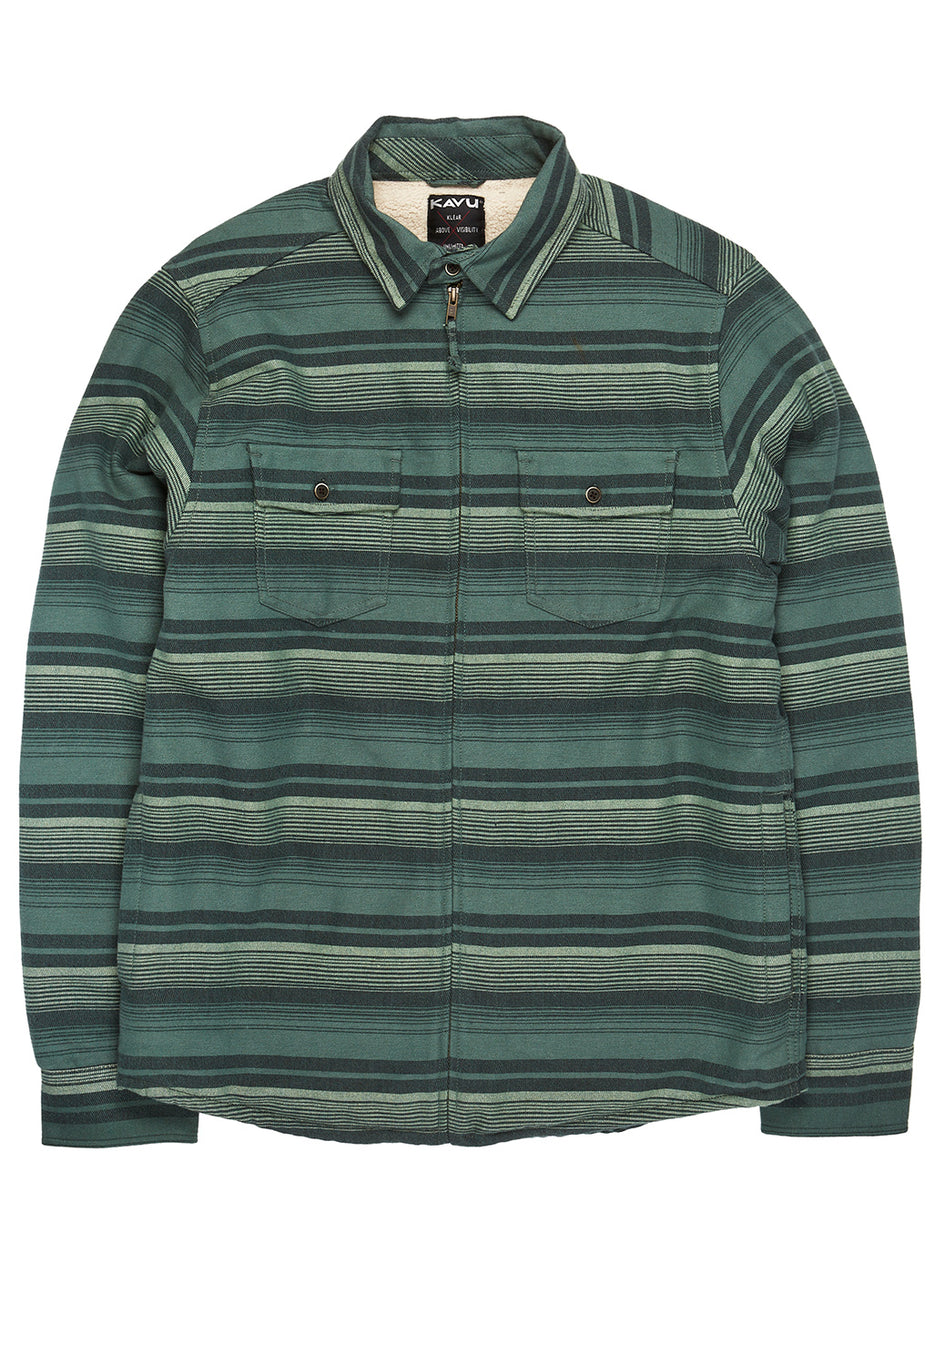 KAVU Men's Eagle Pine Shirt Jacket - Dark Forest Stripe